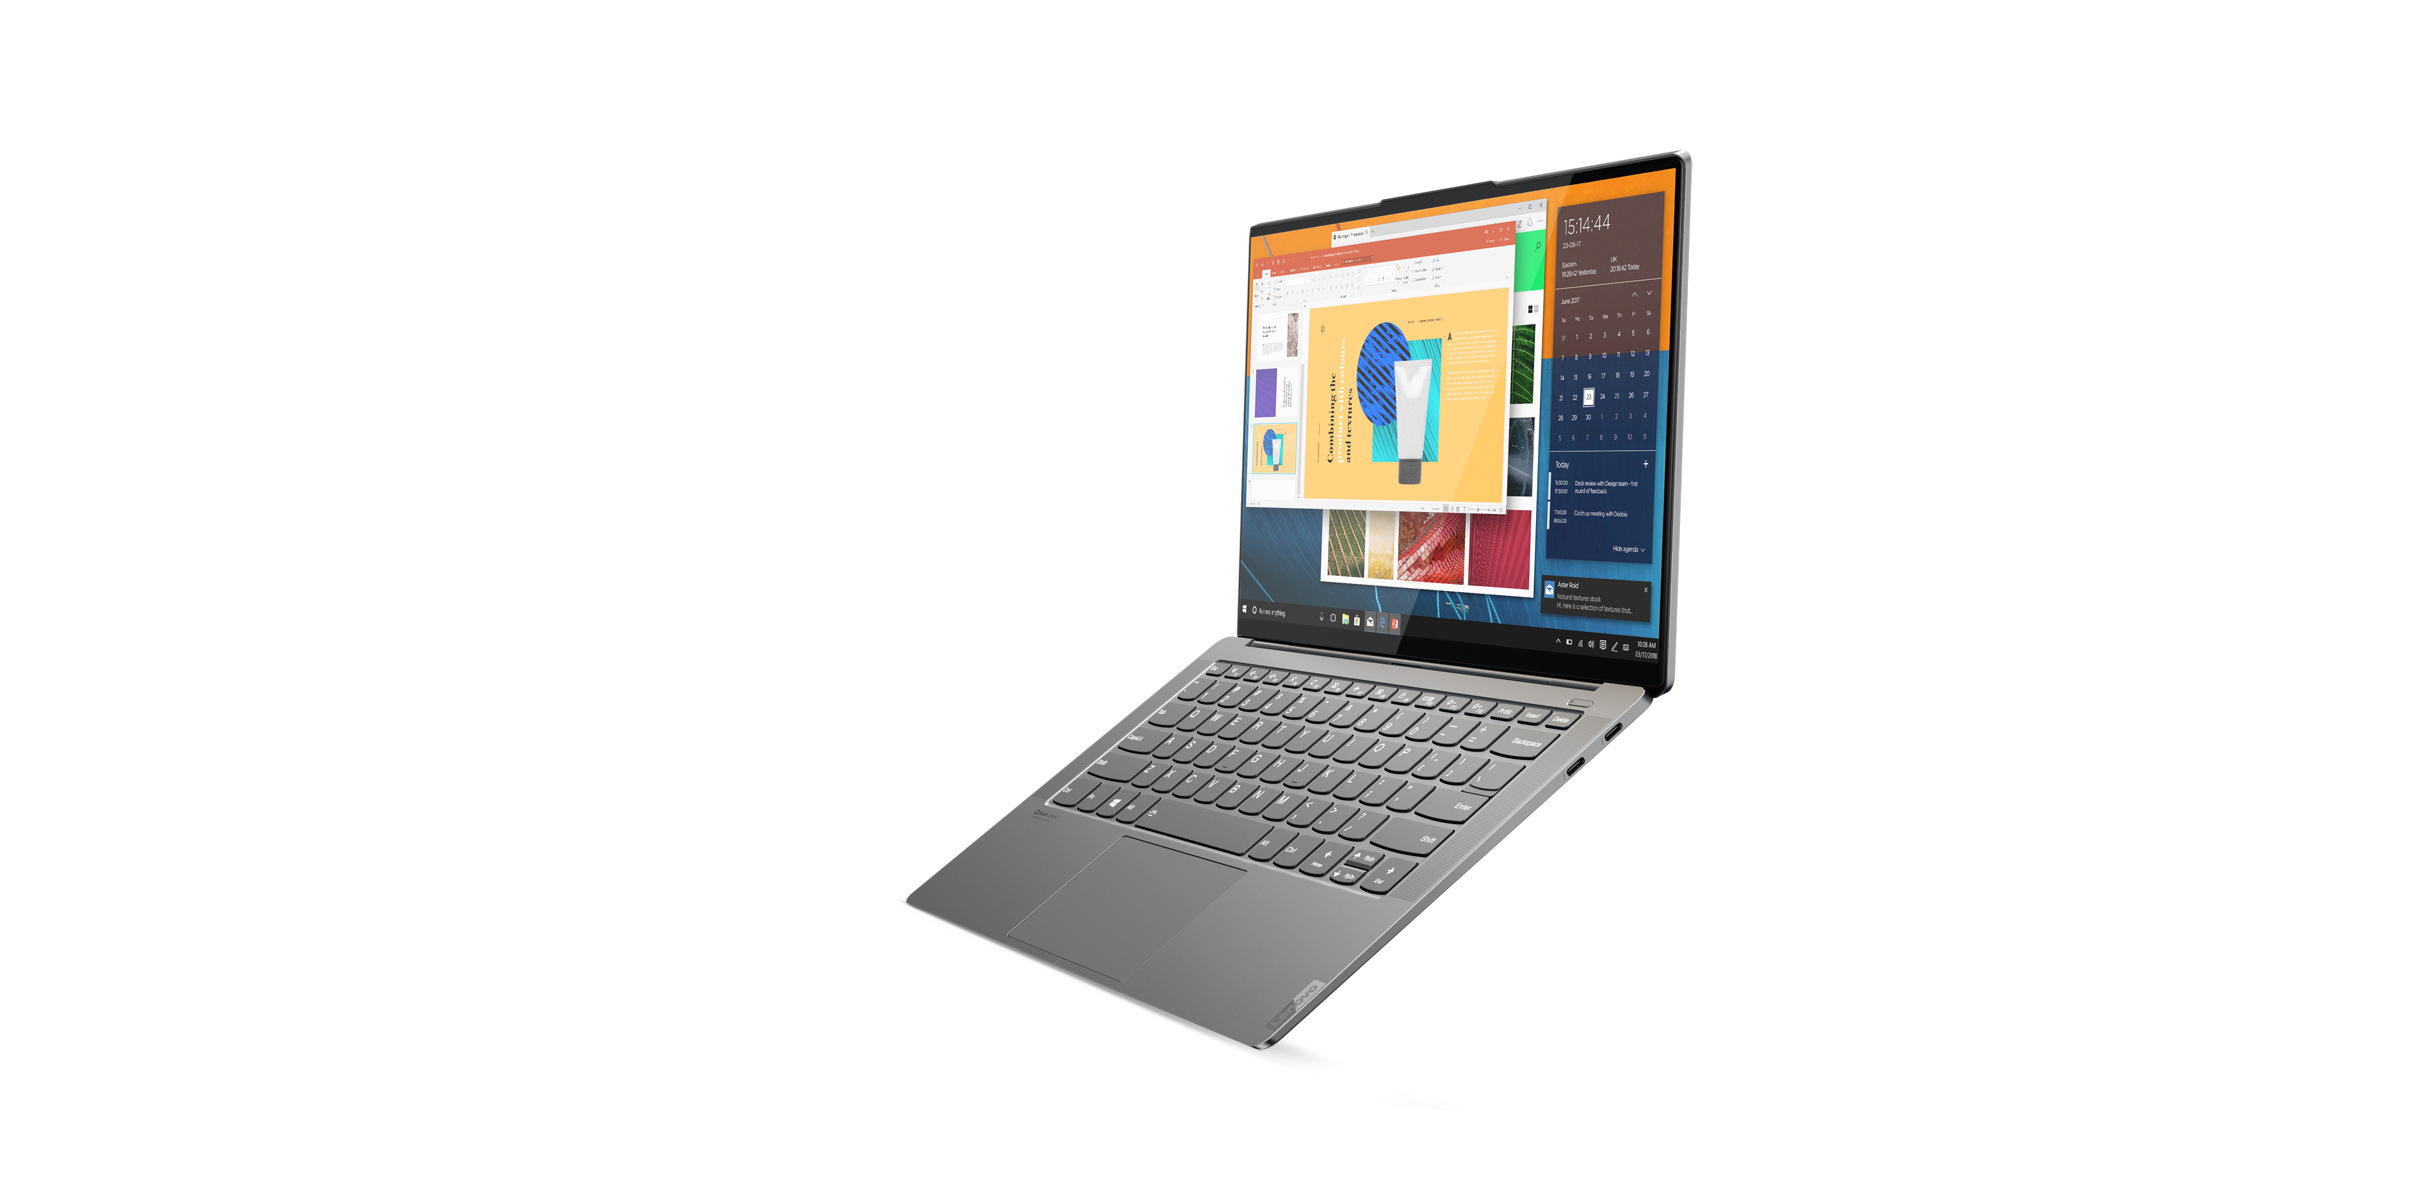 Yoga S940 ultra-slim laptop